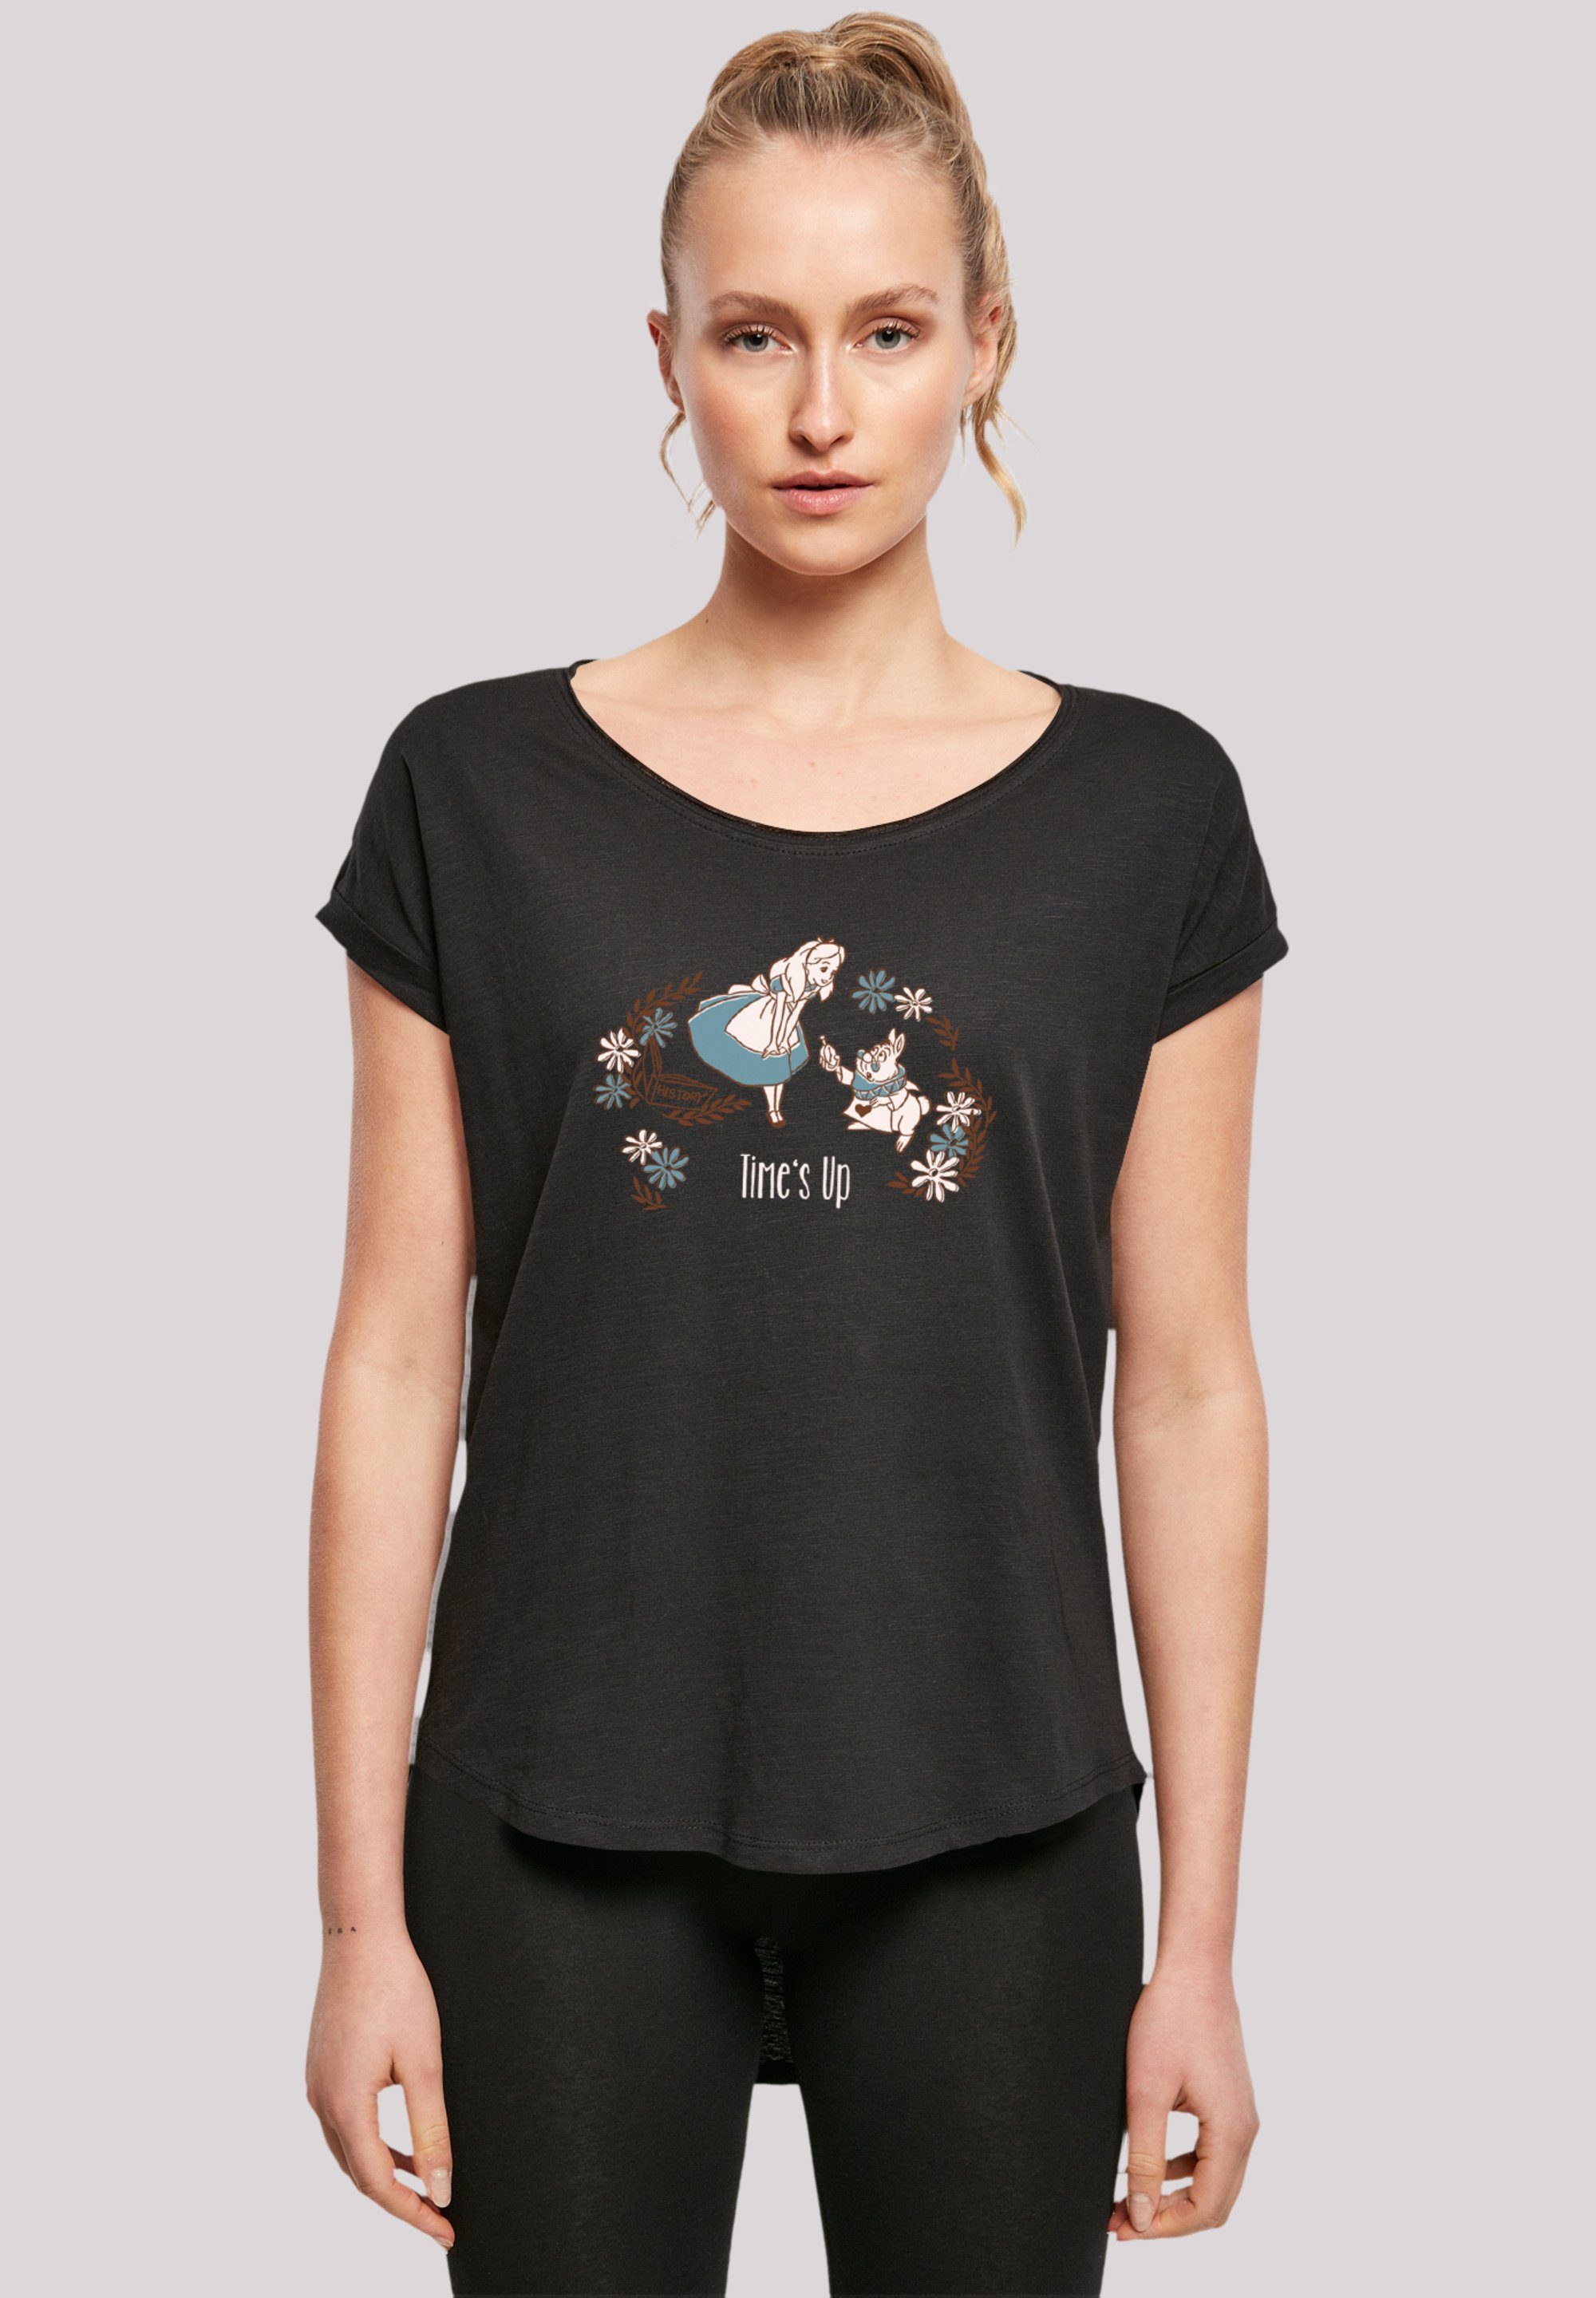 extra Qualität, geschnittenes Up F4NT4STIC T-Shirt Wunderland T-Shirt Time\'s Premium Hinten lang Damen im Disney Alice